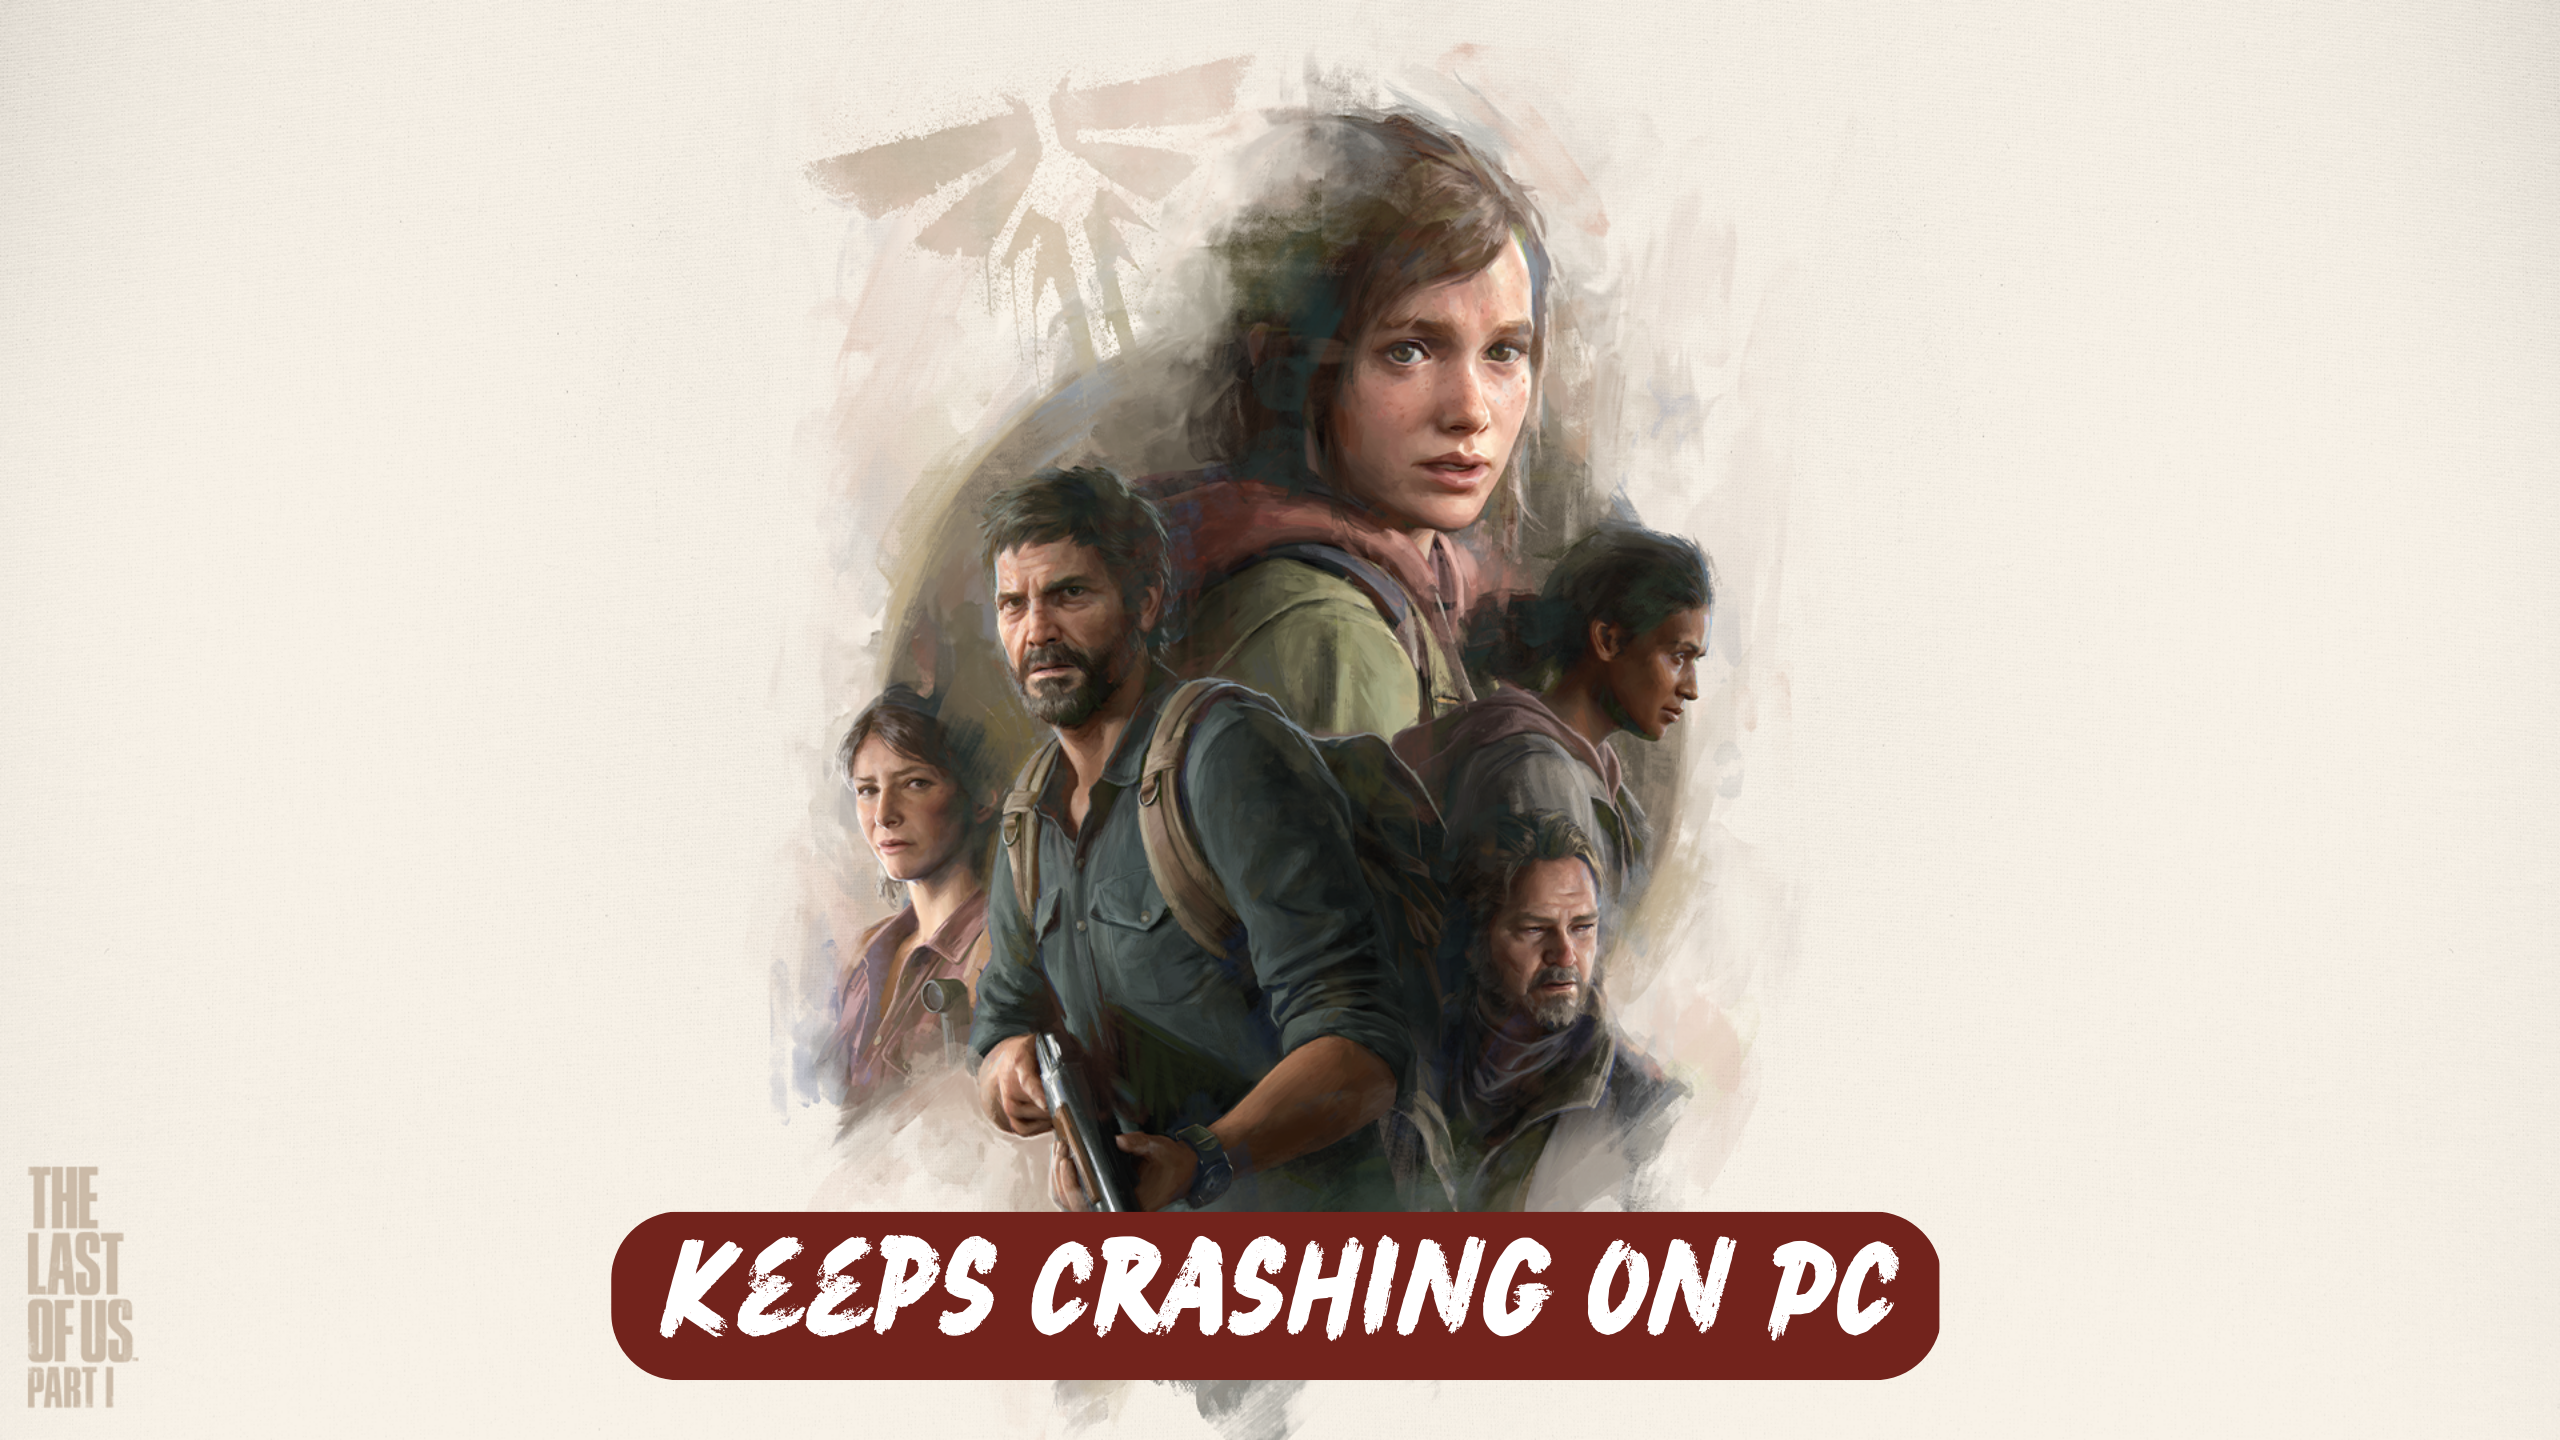 The Last of Us Part 1 Keeps Crashing on PC